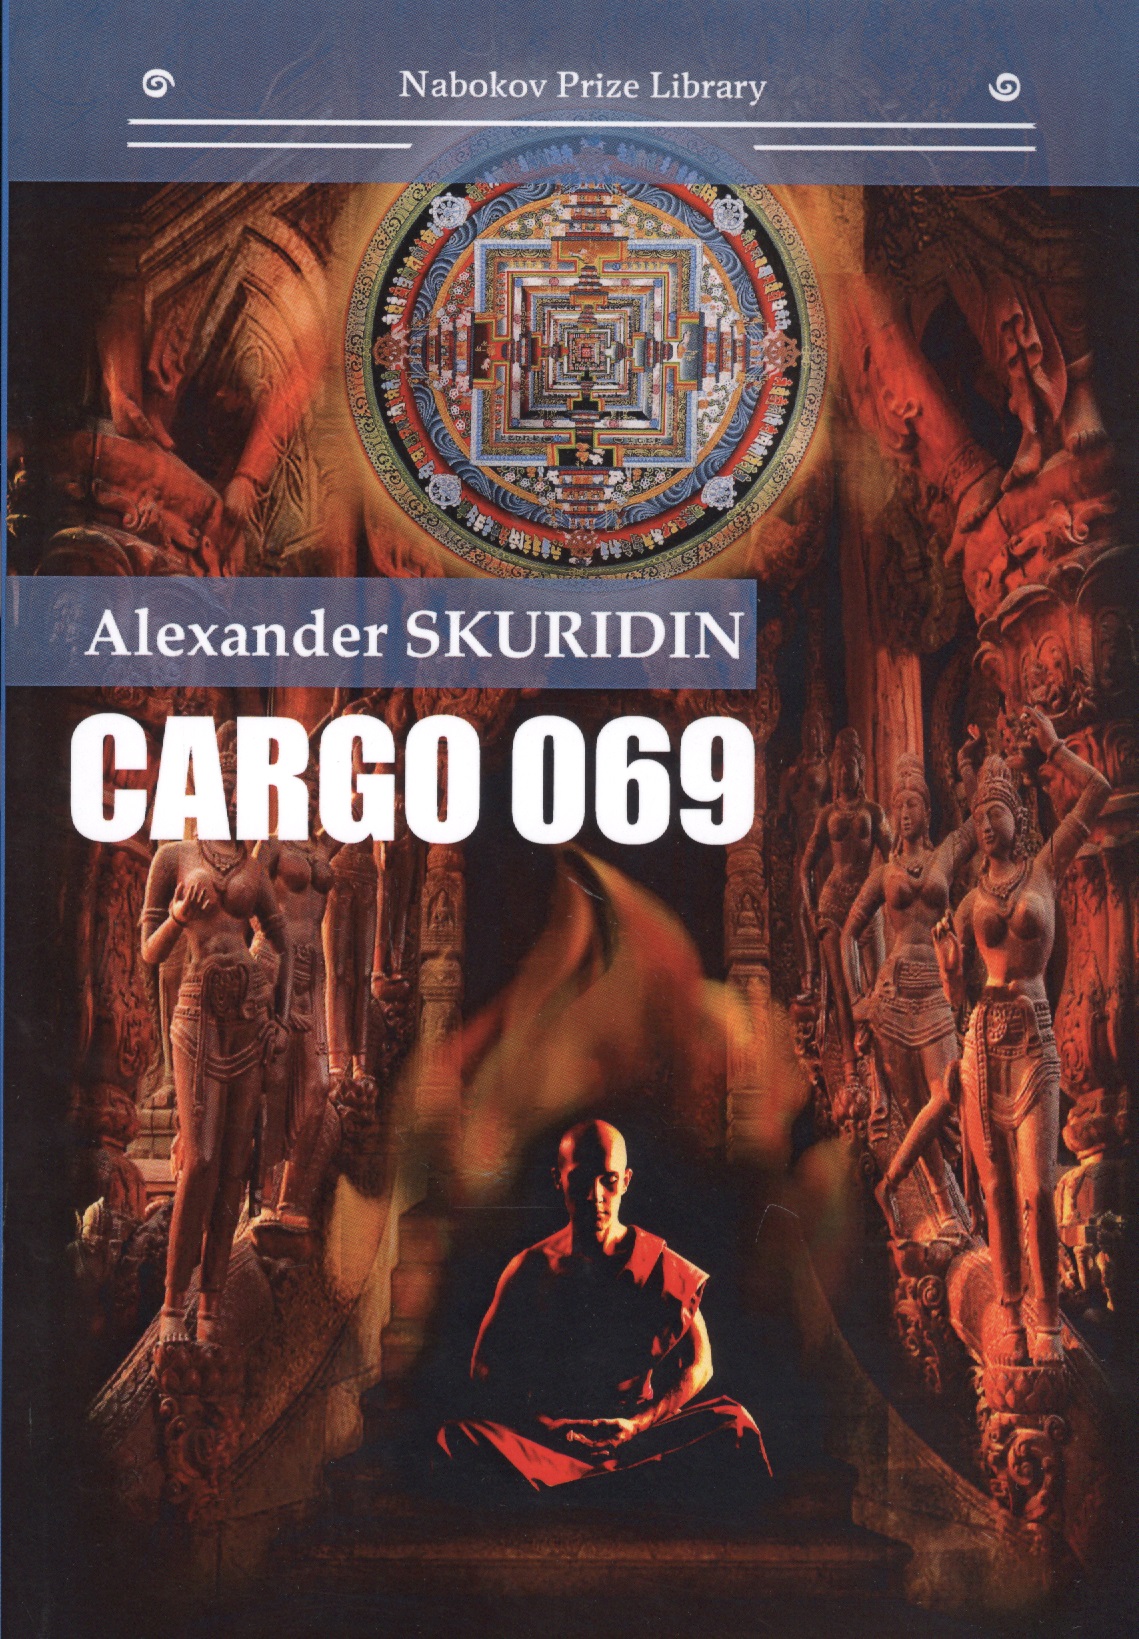 Скуридин Александр Николаевич Gargo 069 foreign language book gargo 069 книга на английском языке скуридин а